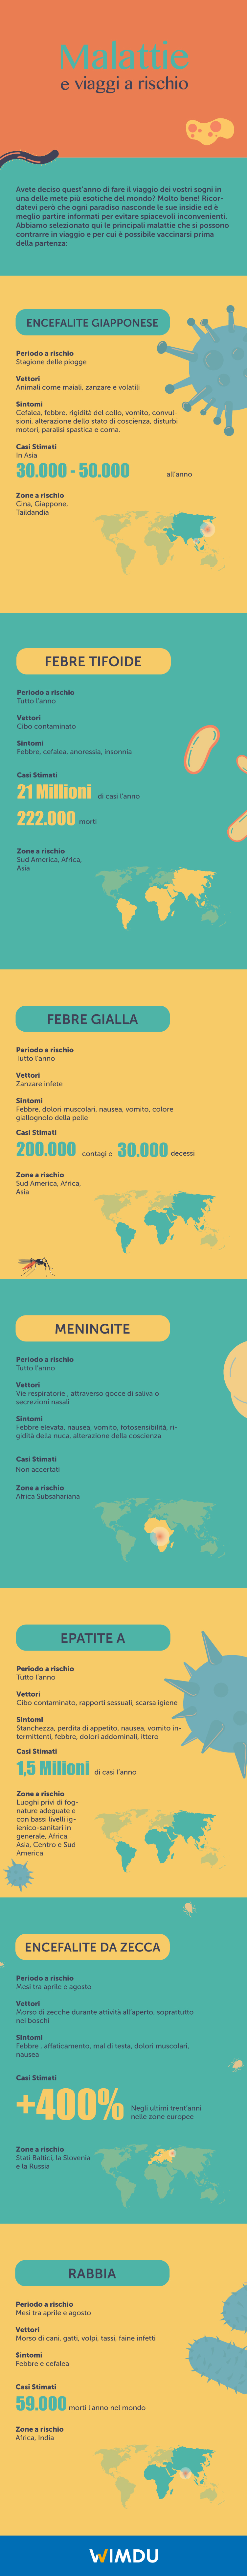 Malattie_infografica